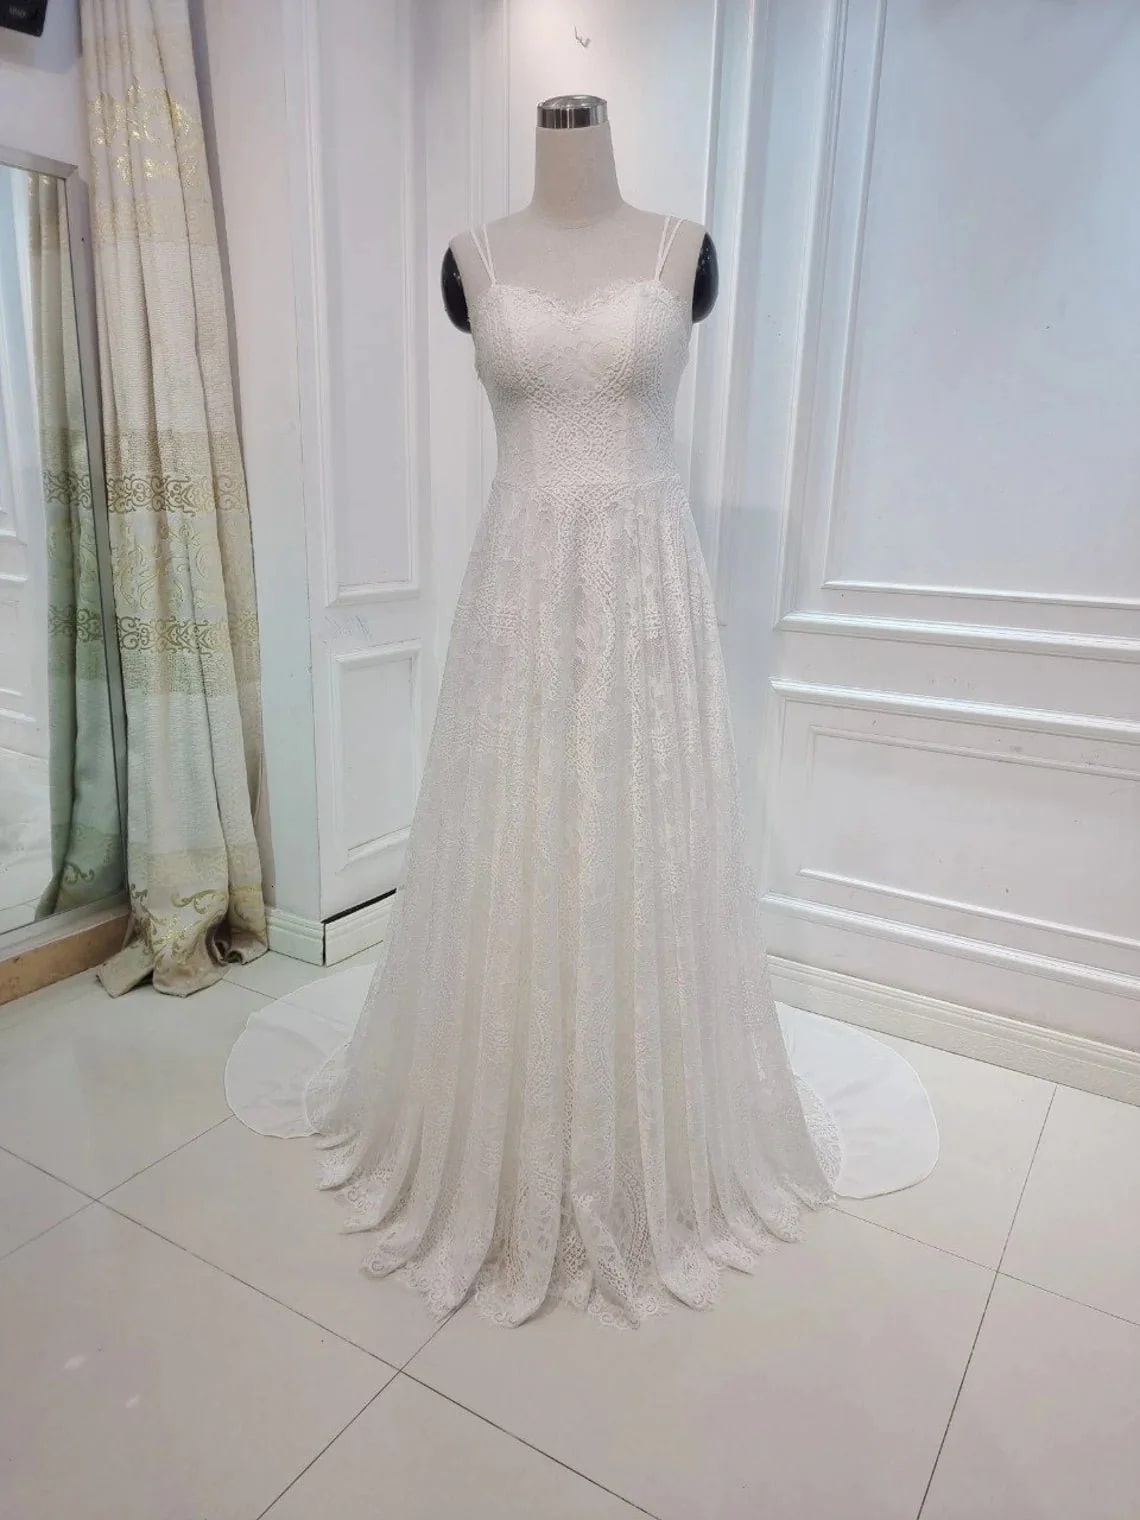 Elegant boho wedding dress. French lace wedding dress with open back. Simple lace wedding dress. Boho A-line wedding dress